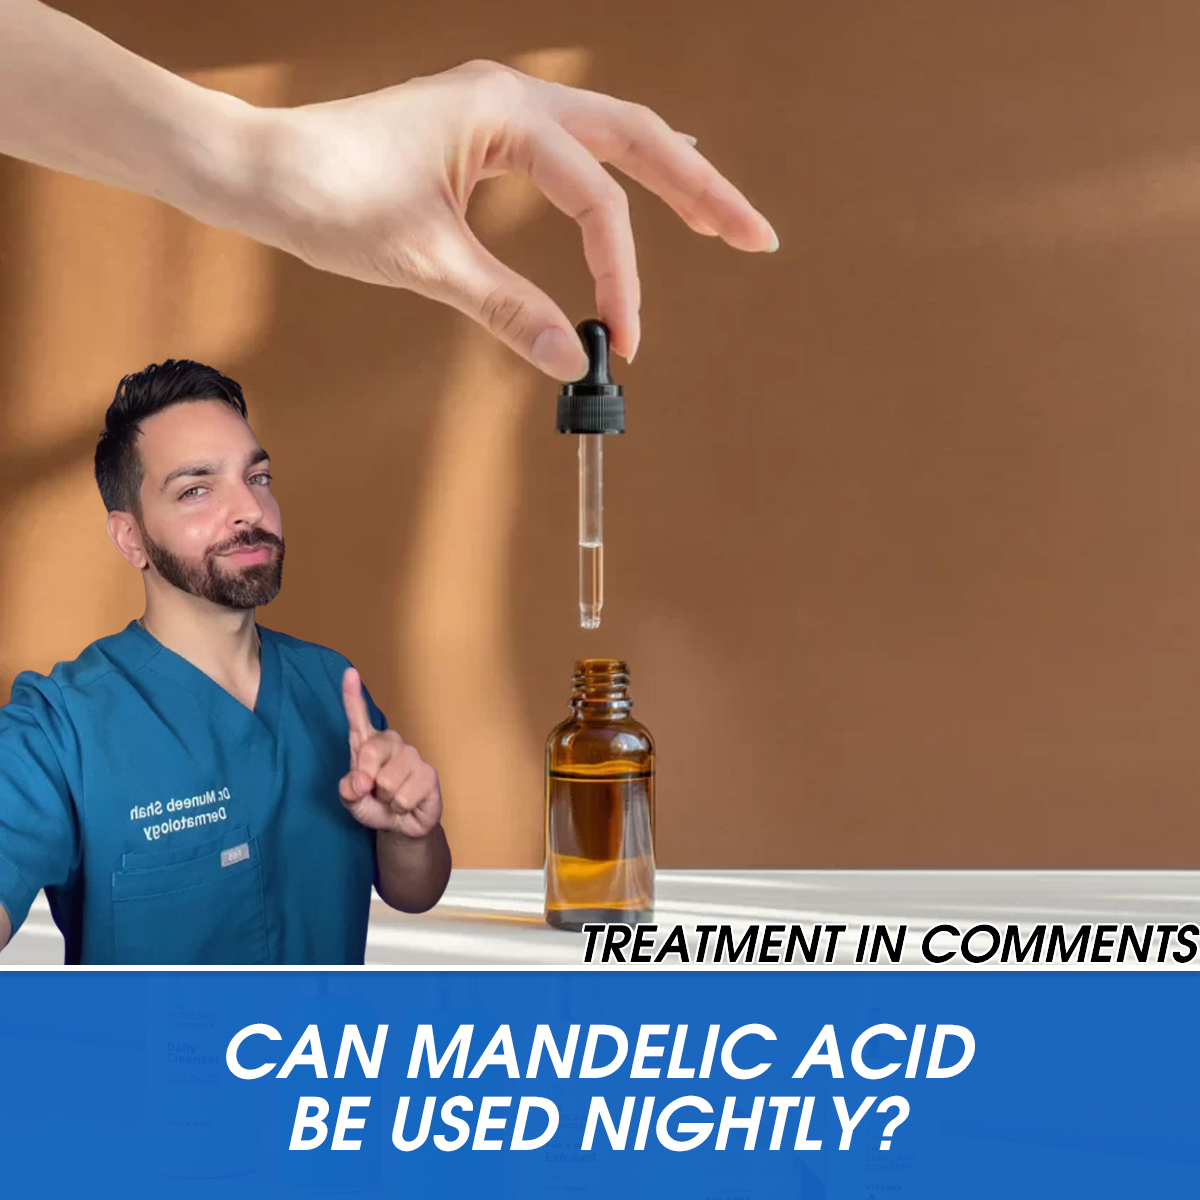 Can mandelic acid be used nightly?